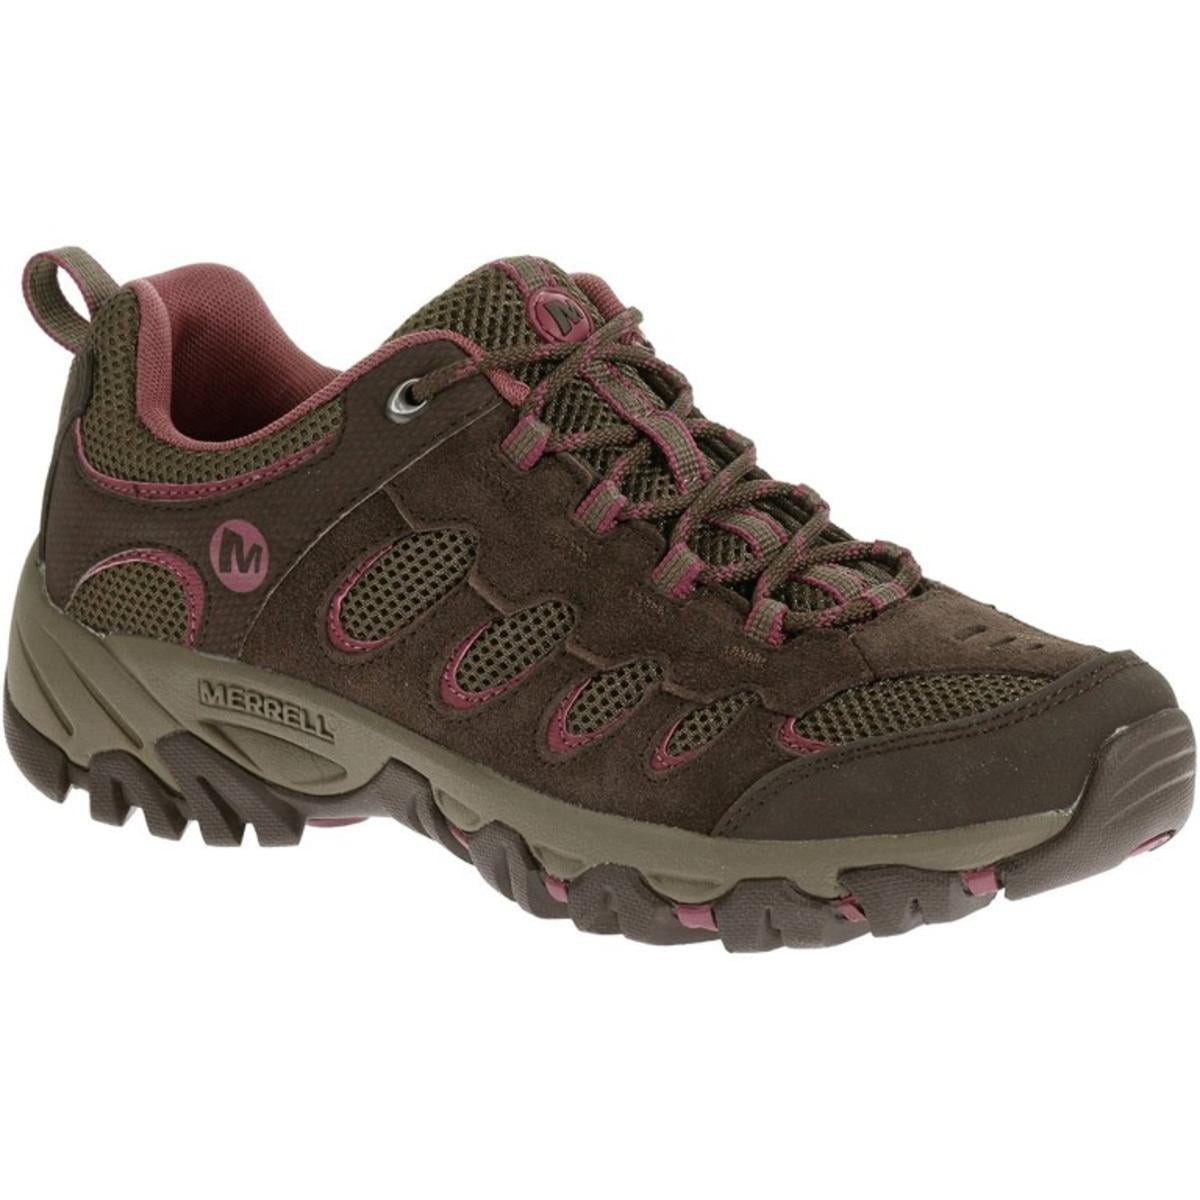 Merrell Ridgepass WaterProof Women's Espresso/Blushing Hiking Shoes 5M ...